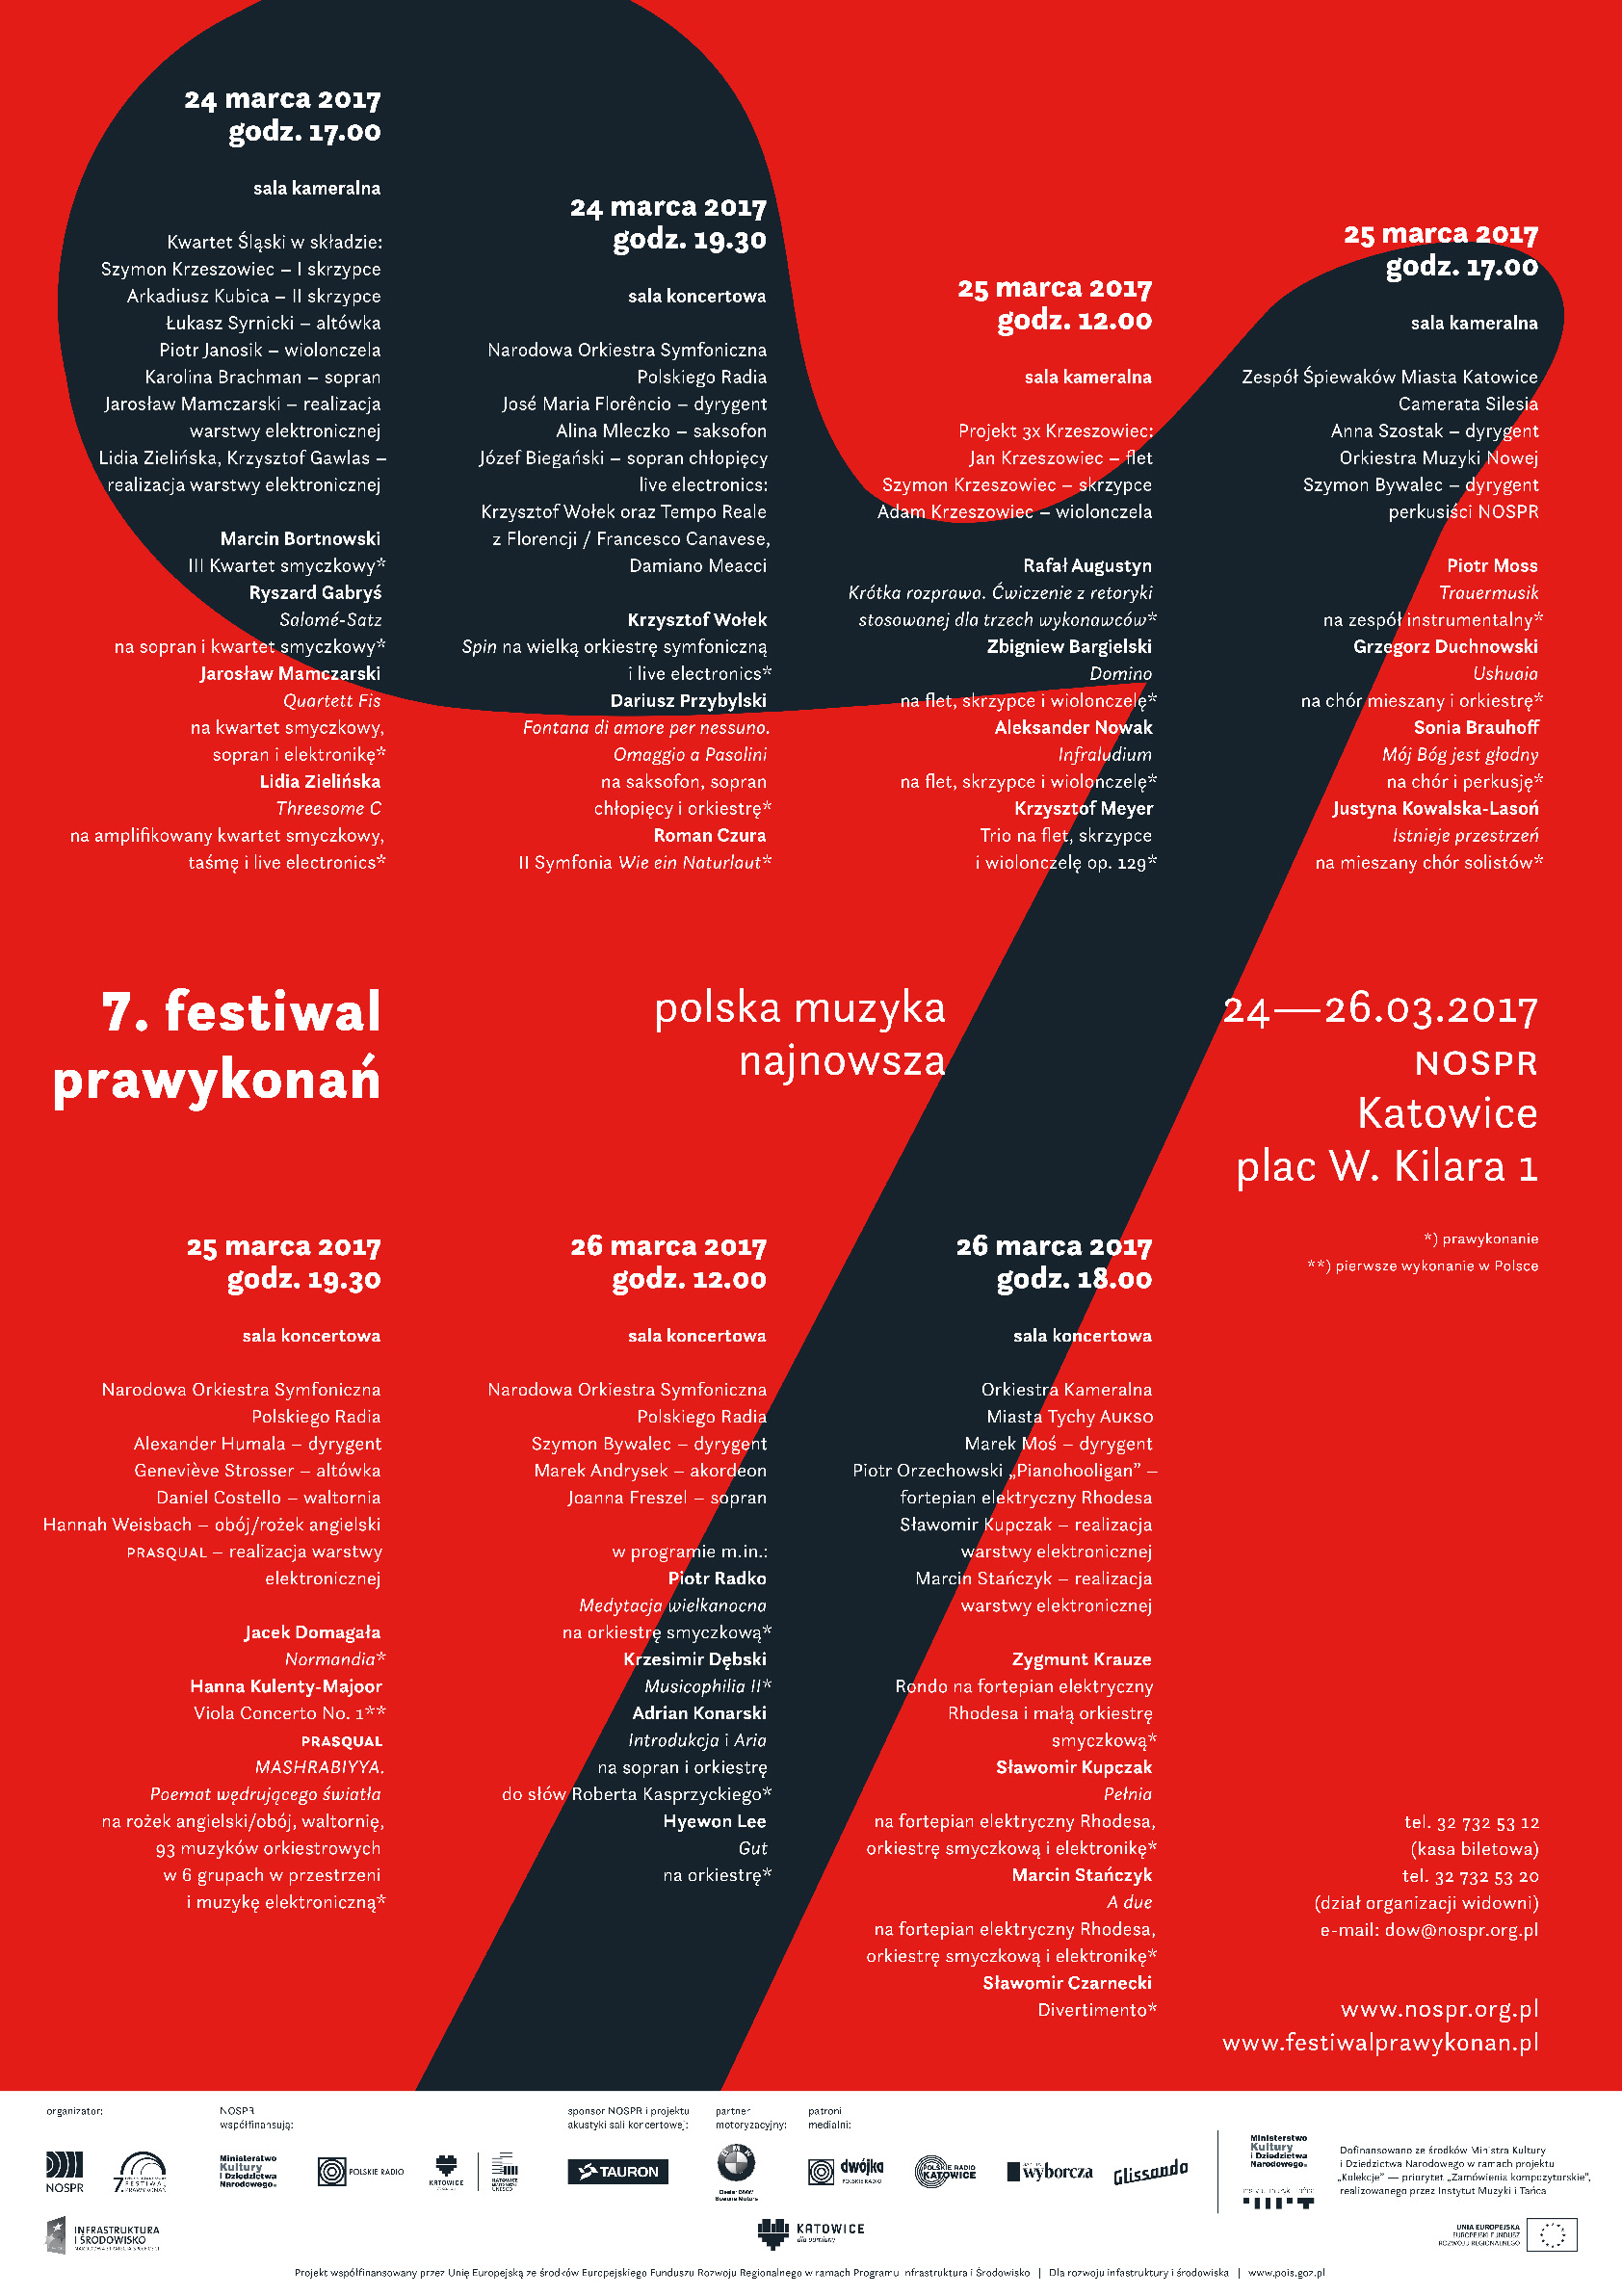 Festiwal Prawykonań NOSPR